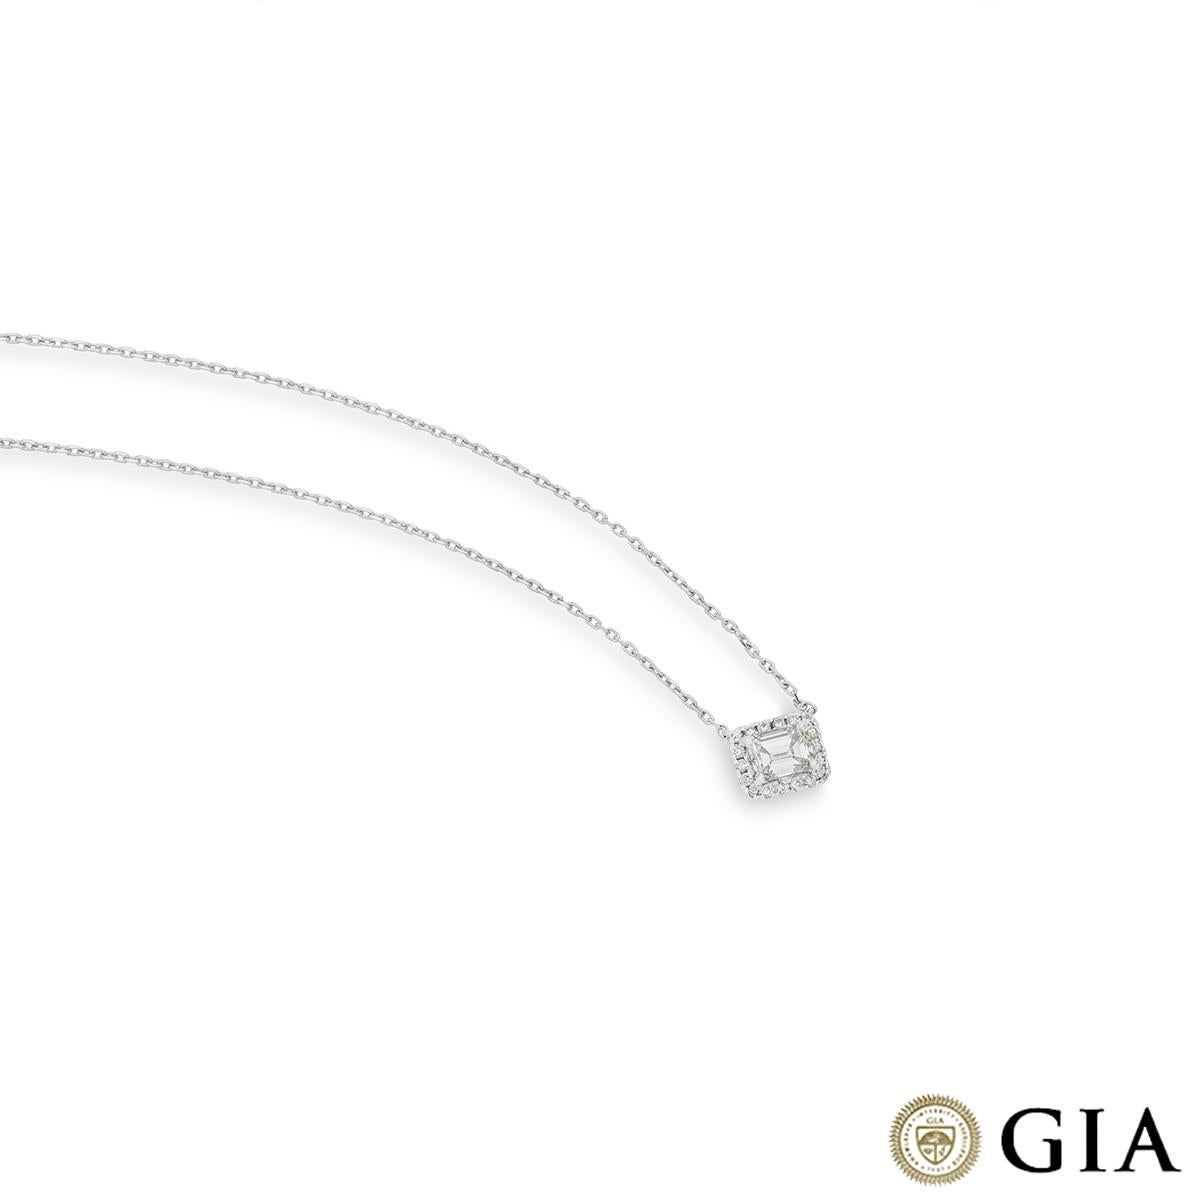 GIA Certified White Gold Emerald Cut Diamond Pendant 0.51 Carat F/VS1 In New Condition For Sale In London, GB